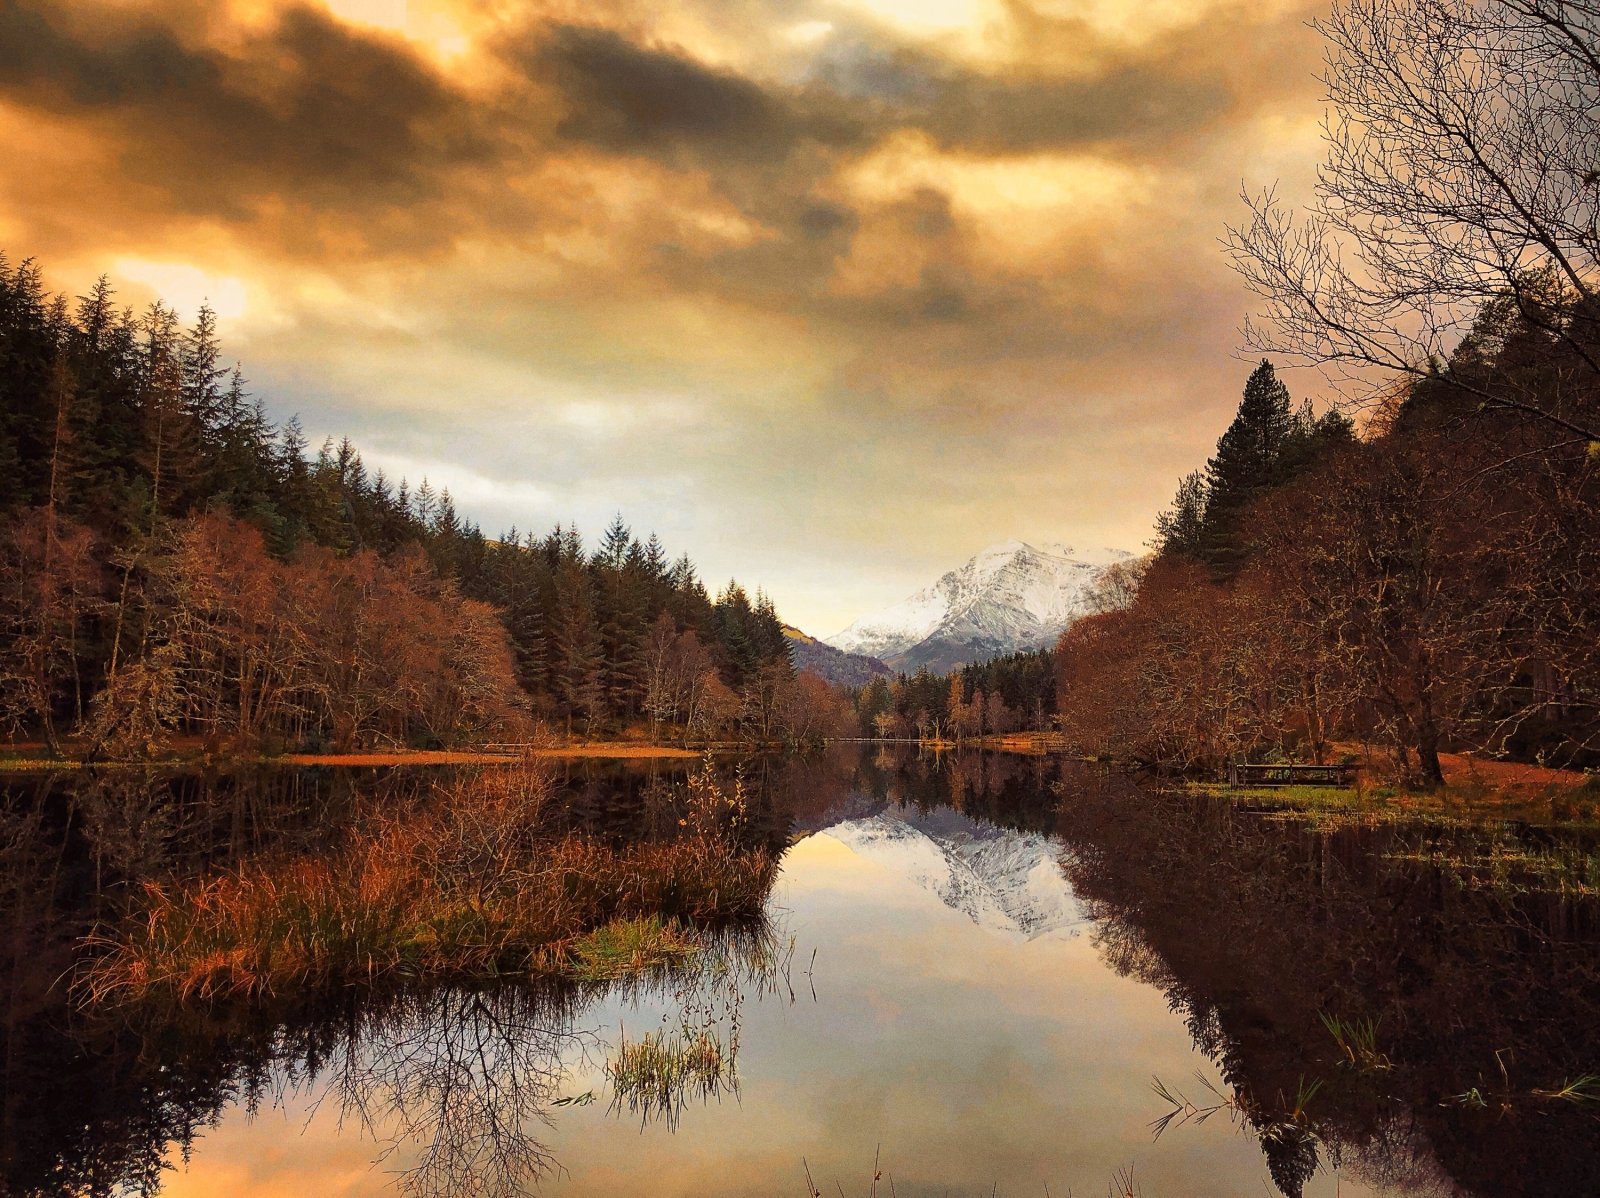 Glencoe Lochan Dusk Scottish Landscape Photography-Scottish Landscape Photography-Scottish Lochs & Mountains Art Gallery-Paintings, Prints, Homeware, Art Gifts From Scotland By Scottish Artist Kevin Hunter